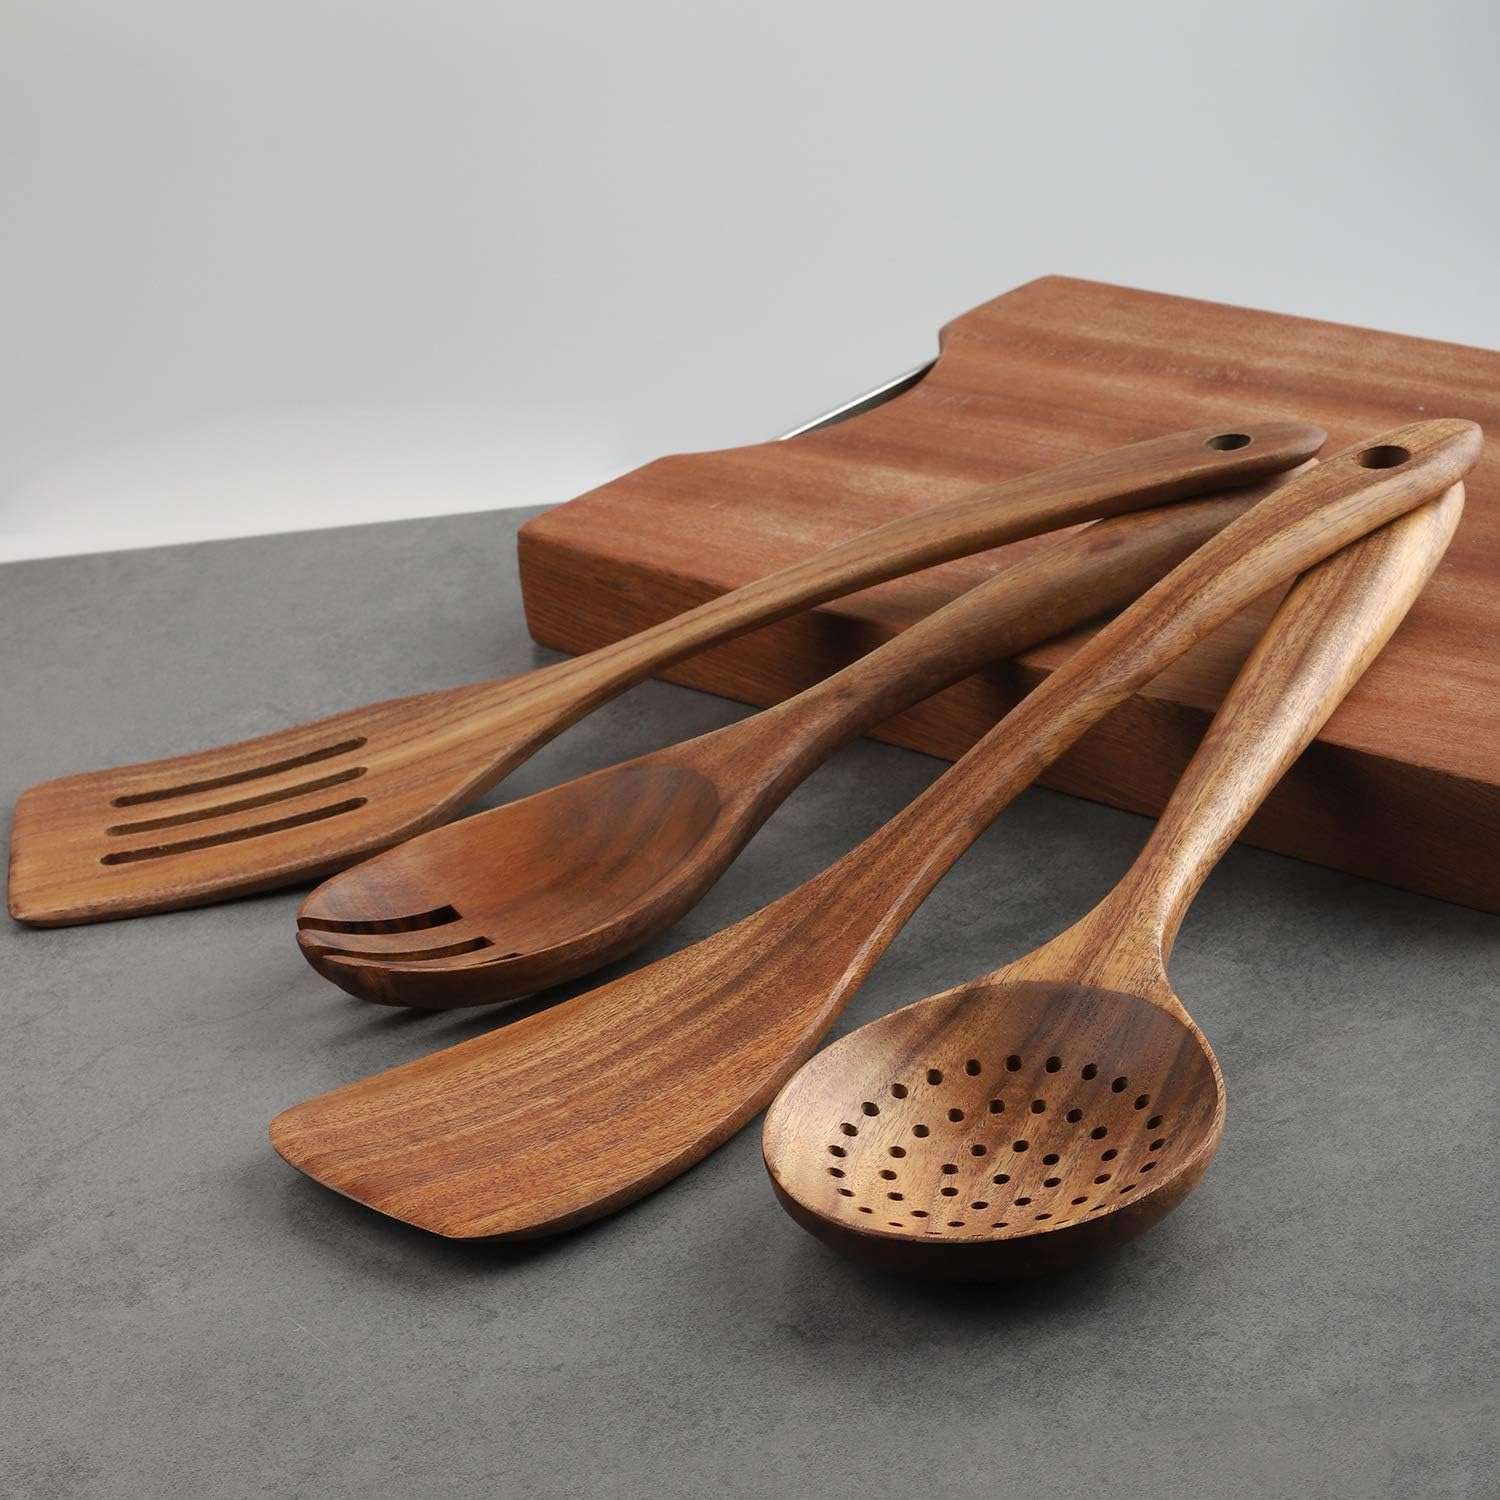 Wooden Cooking Utensils | Set 4-Piece | Wood Kitchen Utensil Set for Non Stick